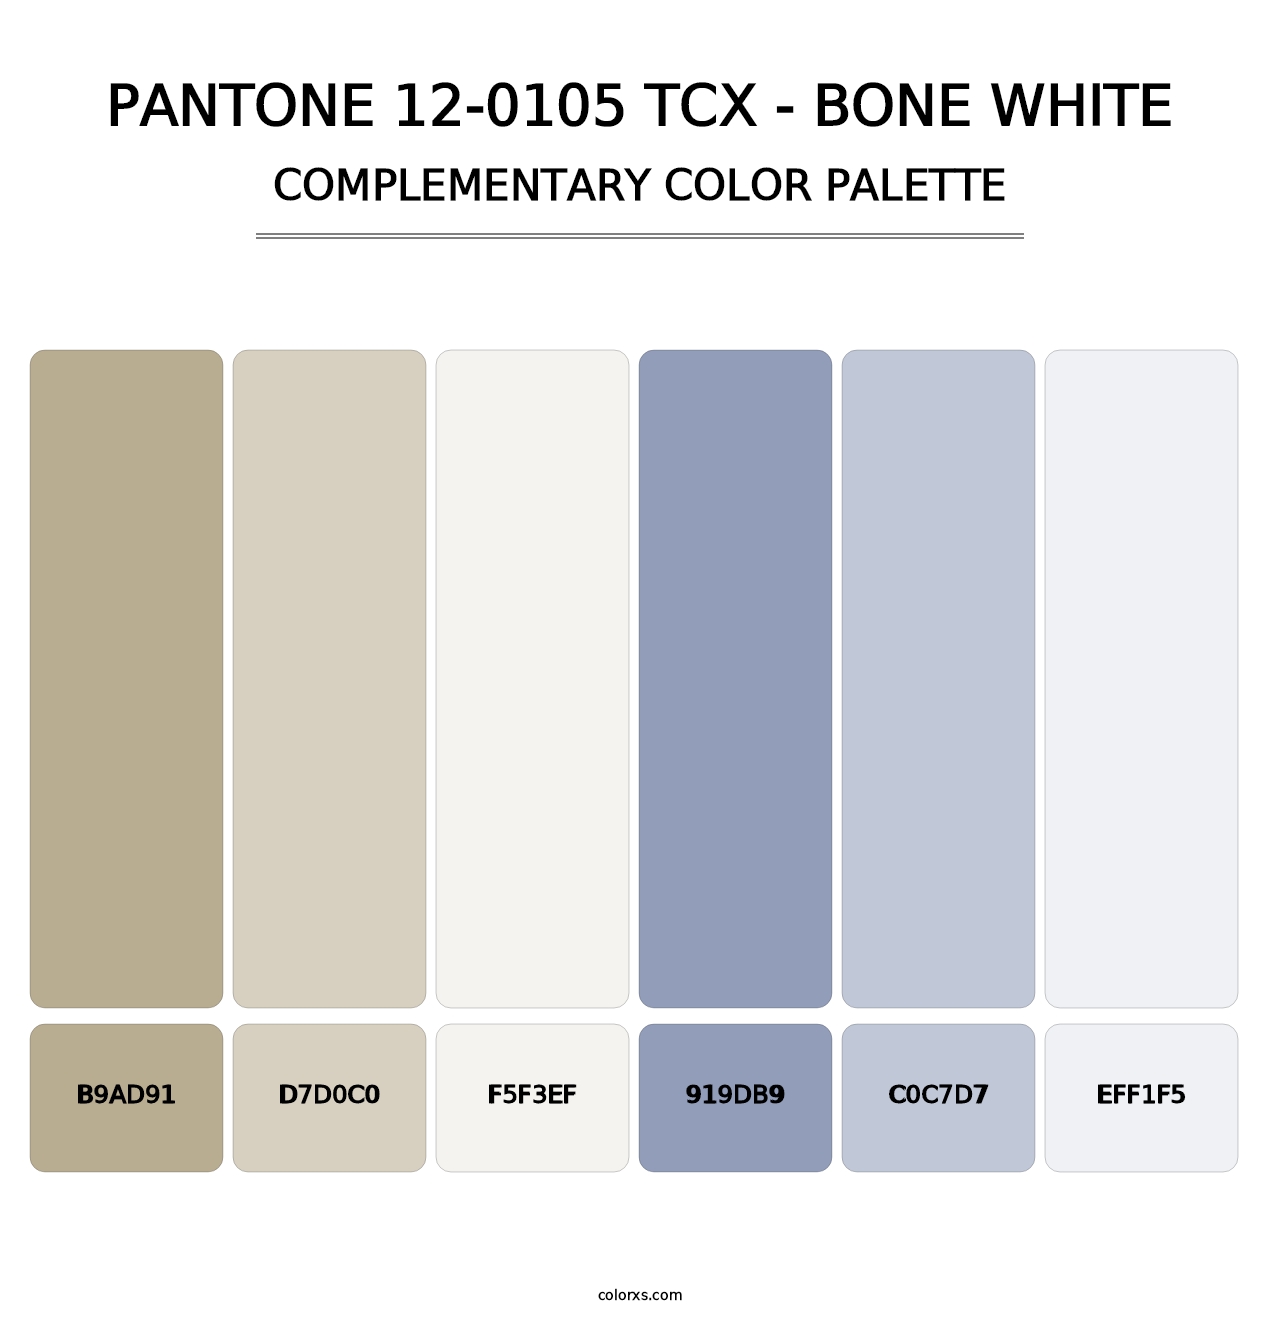 PANTONE 12-0105 TCX - Bone White - Complementary Color Palette